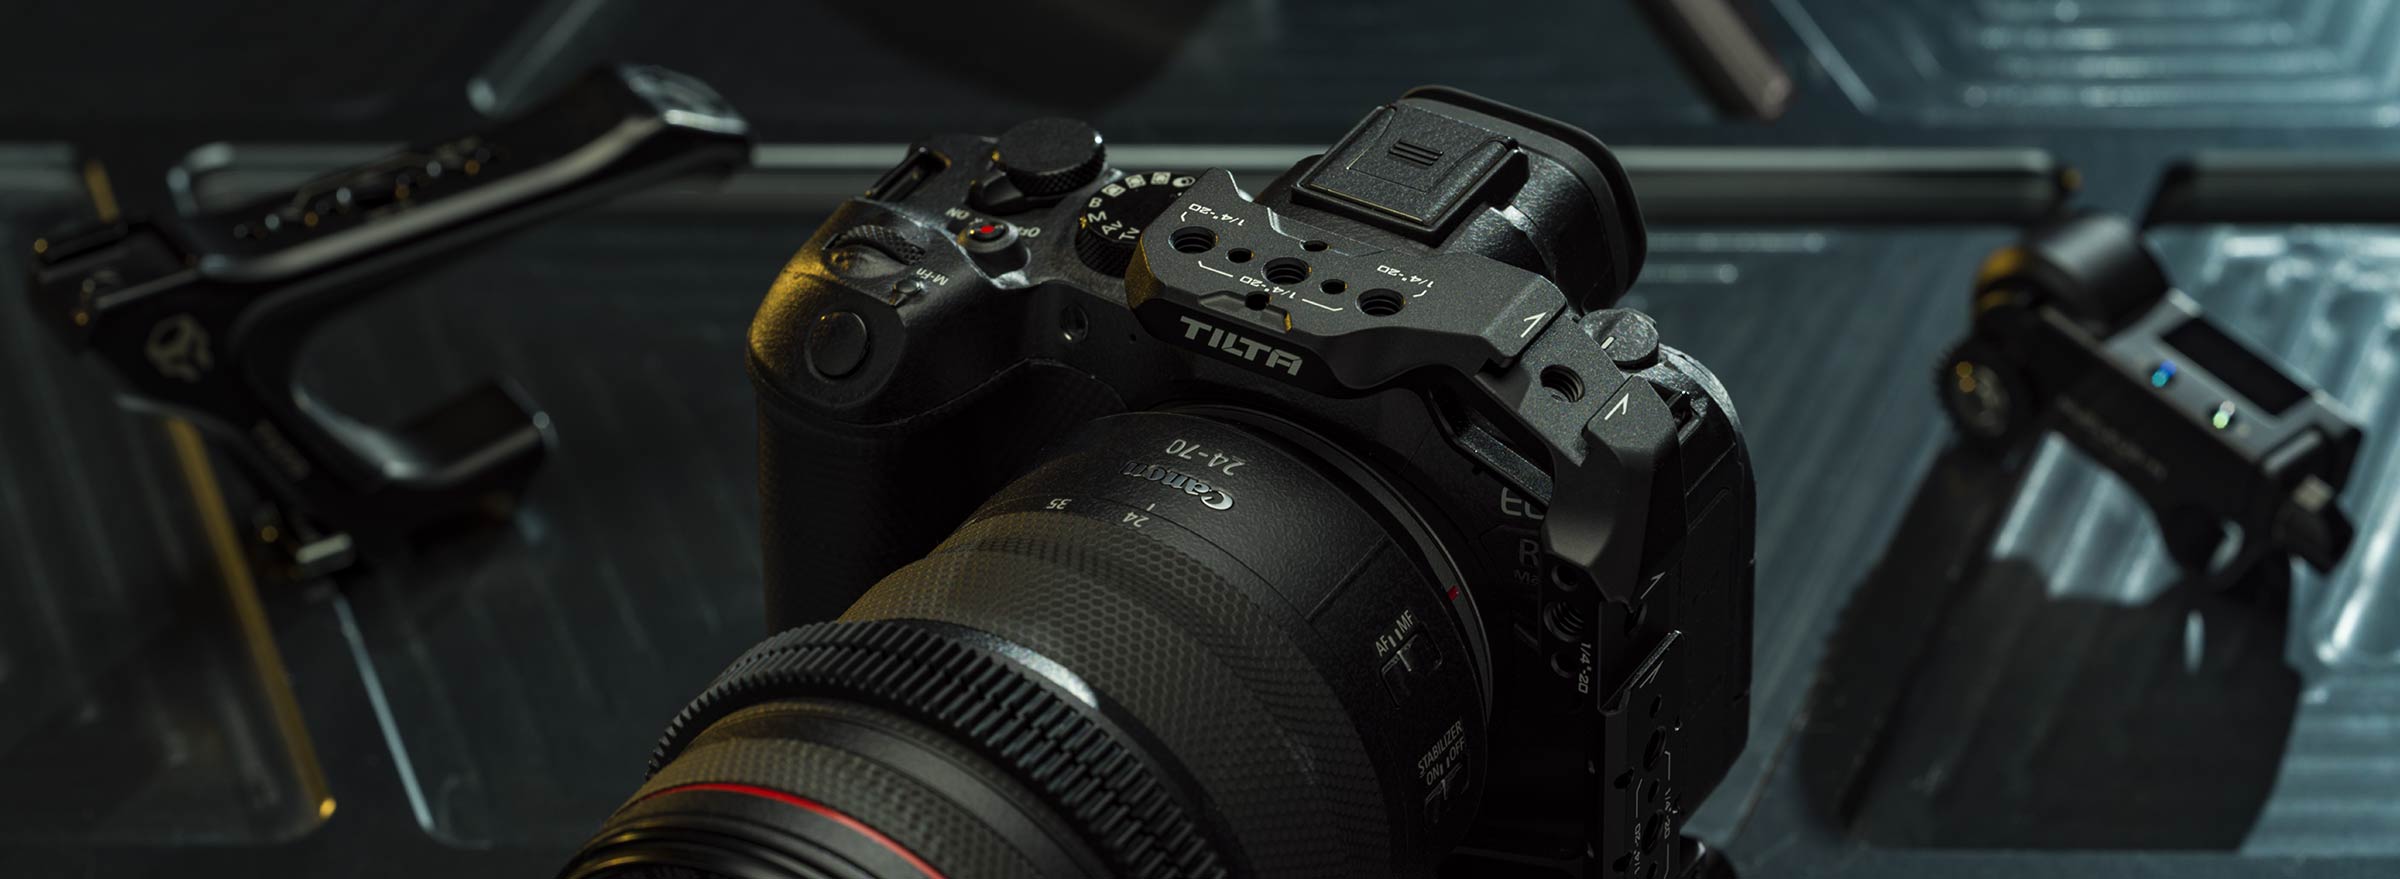 Camera Rig for Canon EOS R6 Mark II